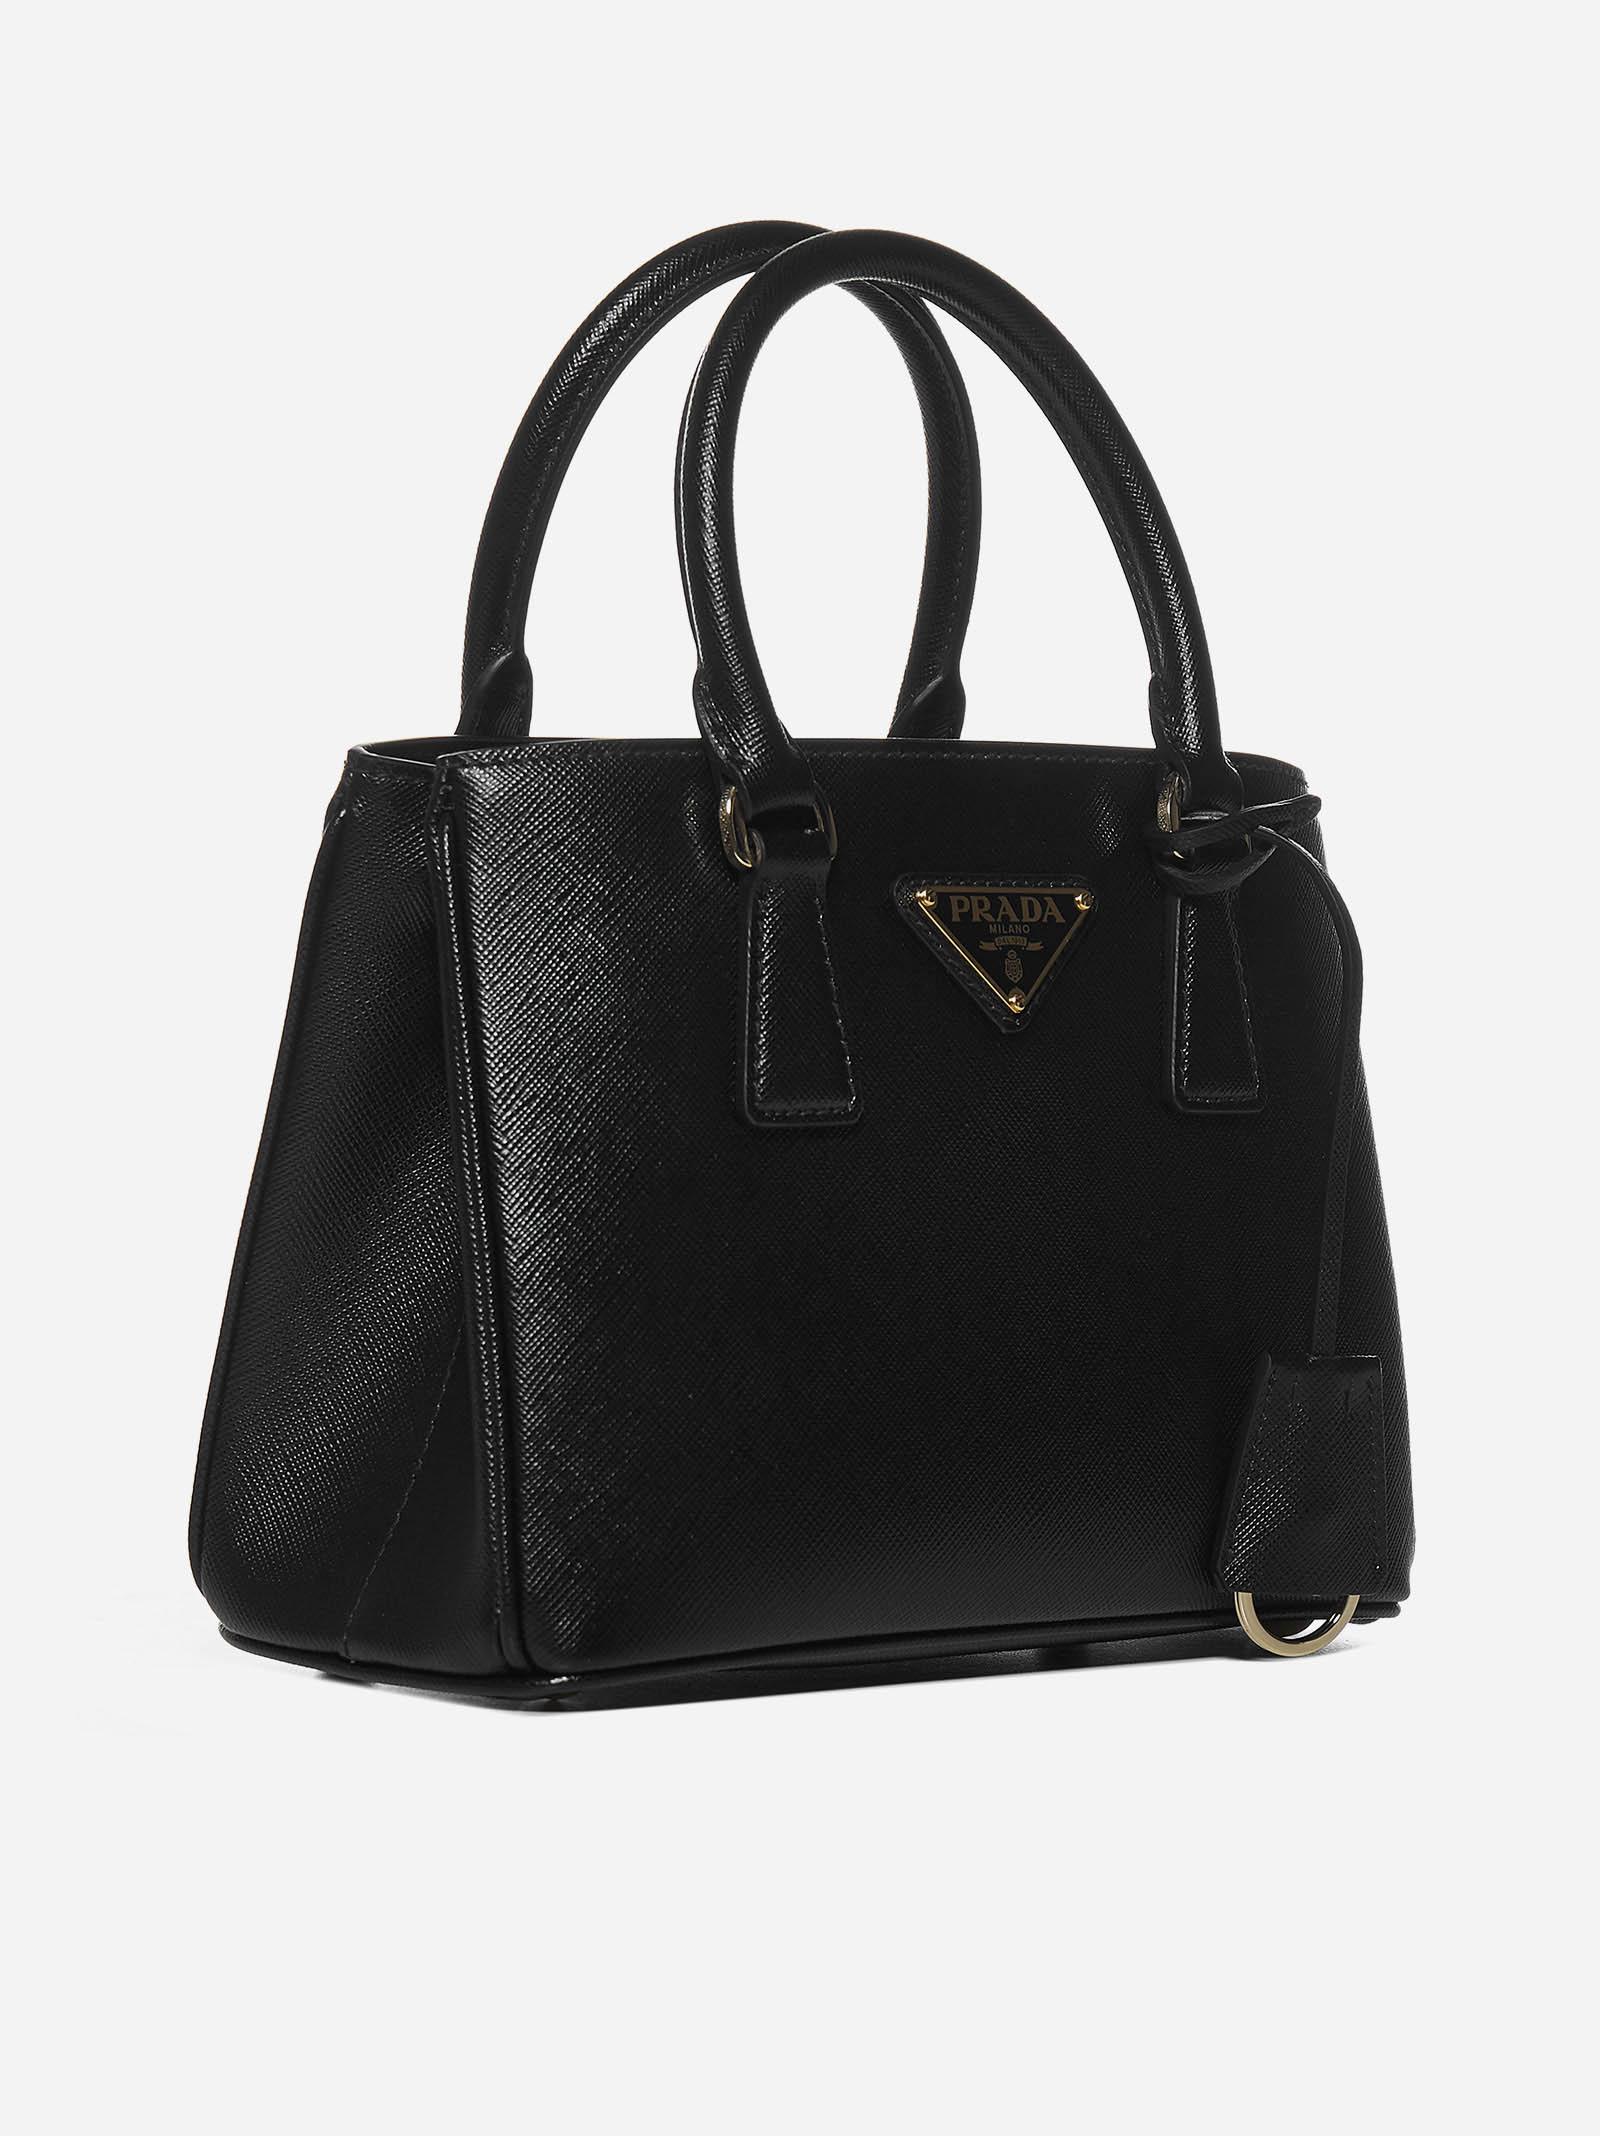 Prada Galleria Micro Saffiano Leather Bag in Black | Lyst